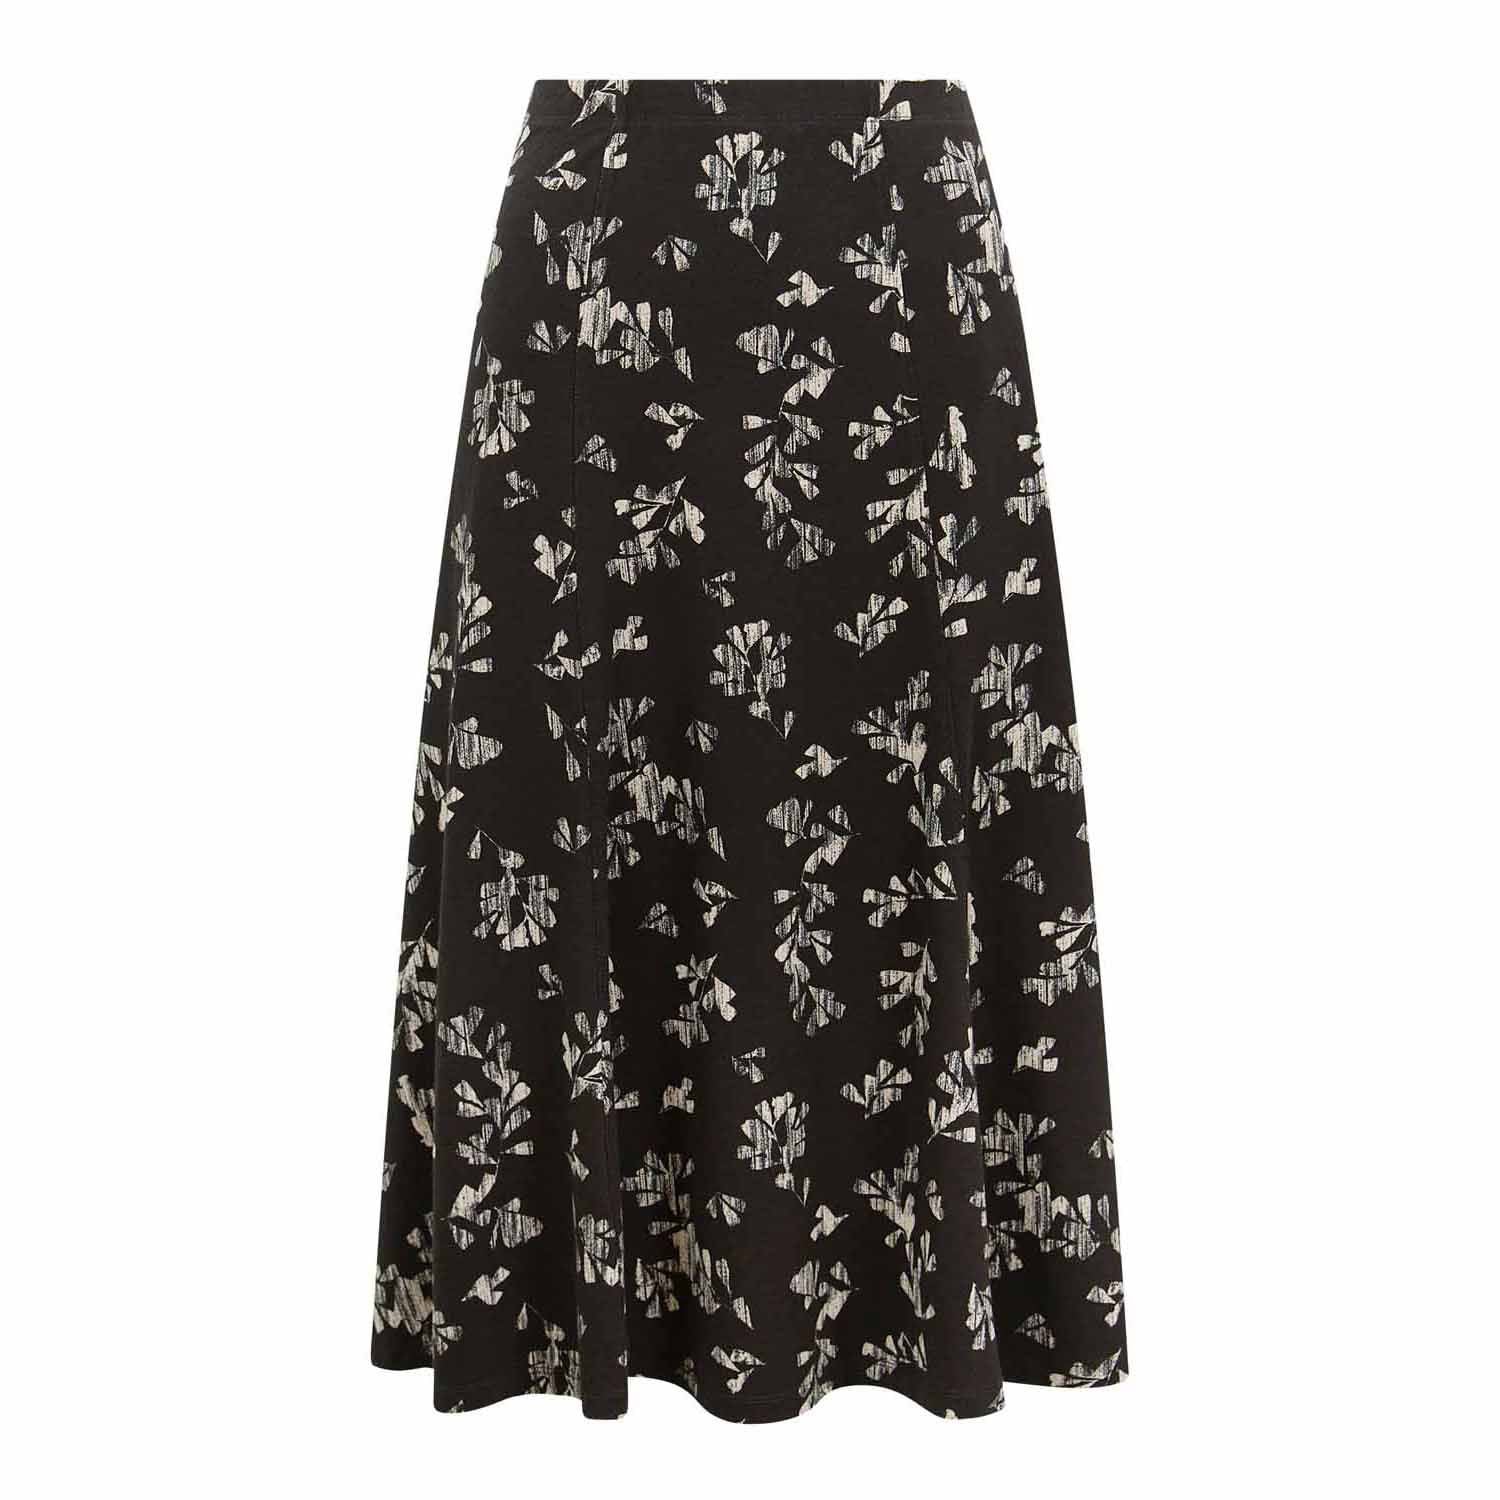 Tigiwear Leaf Print Short Skirt - Black 4 Shaws Department Stores